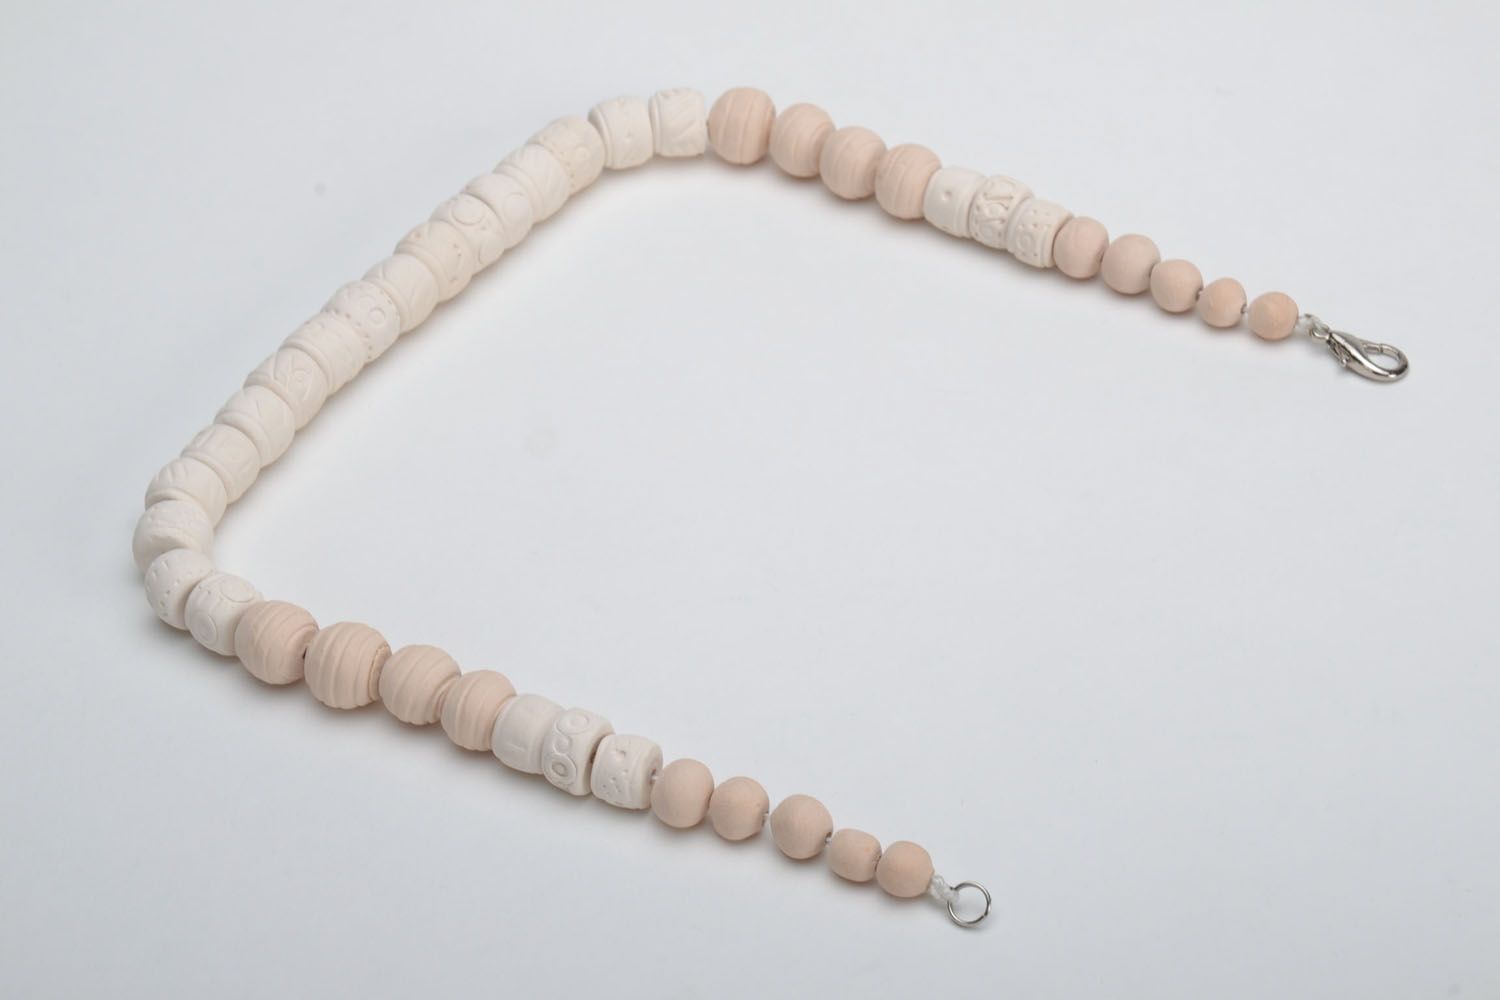 Ceramic necklace in ethnic style photo 4